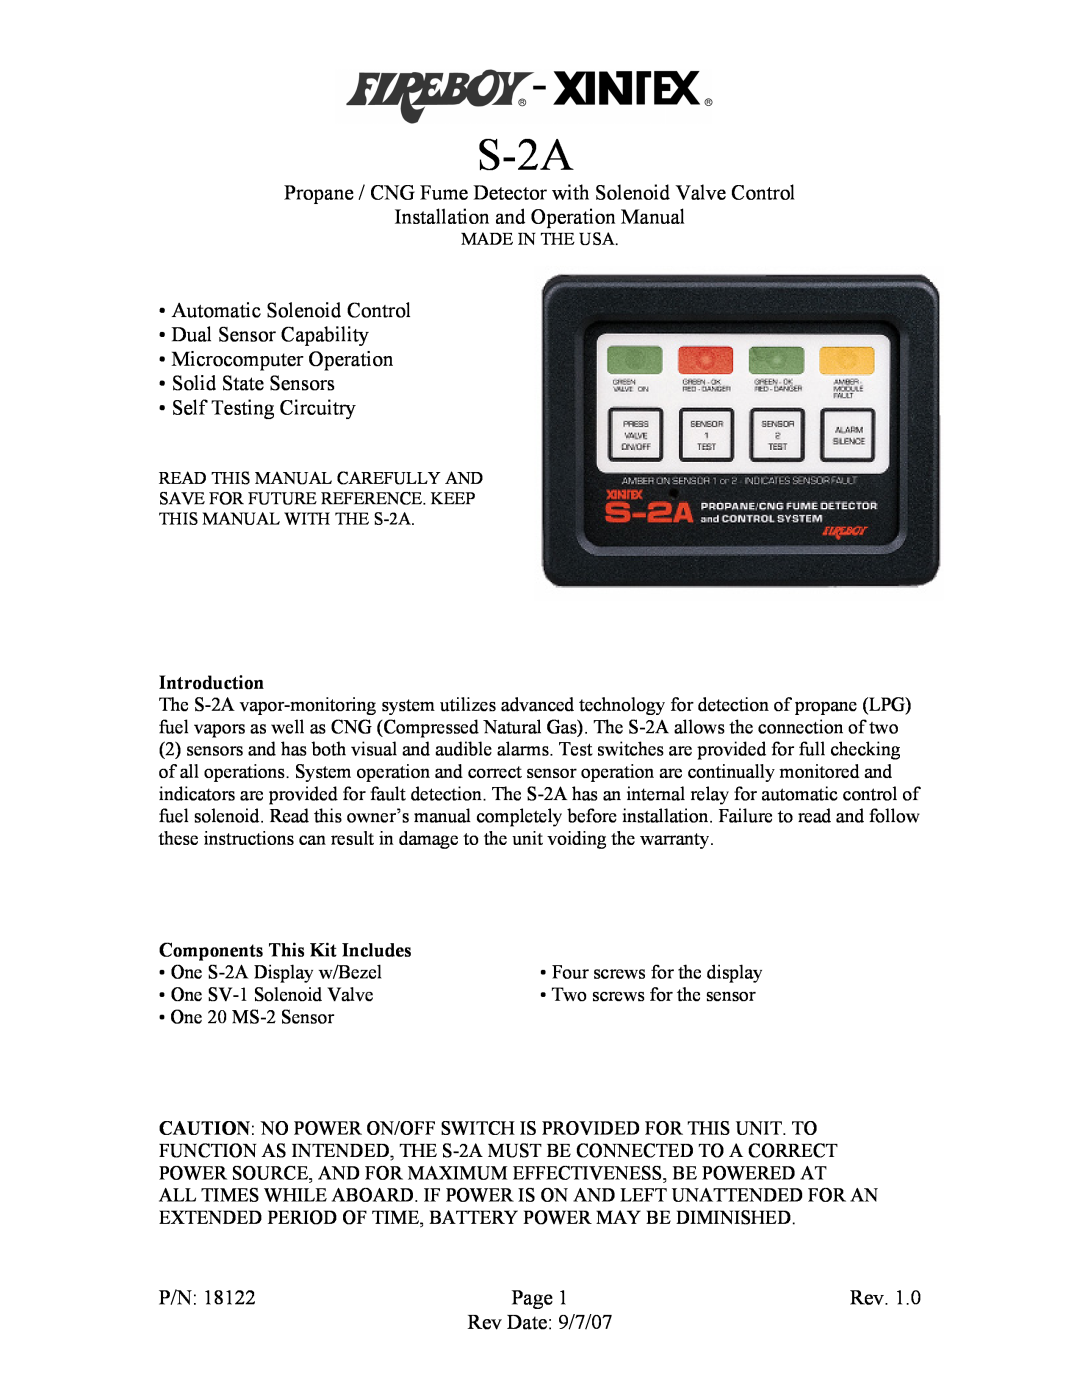 Fireboy- Xintex, LTD S-2A operation manual Automatic Solenoid Control, Dual Sensor Capability Microcomputer Operation, P/N 